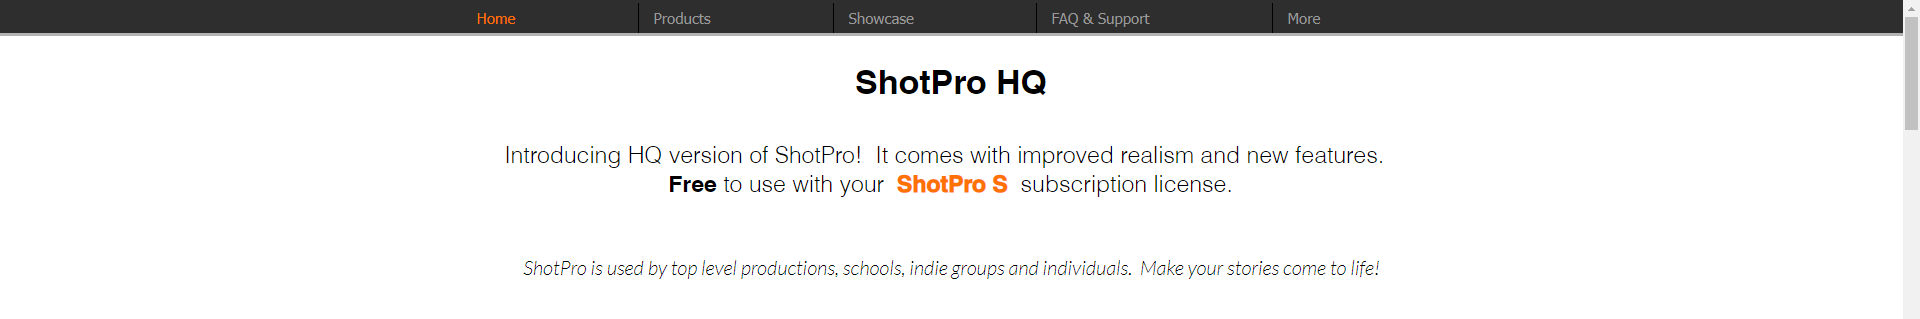 shotpro storyboard creator tools